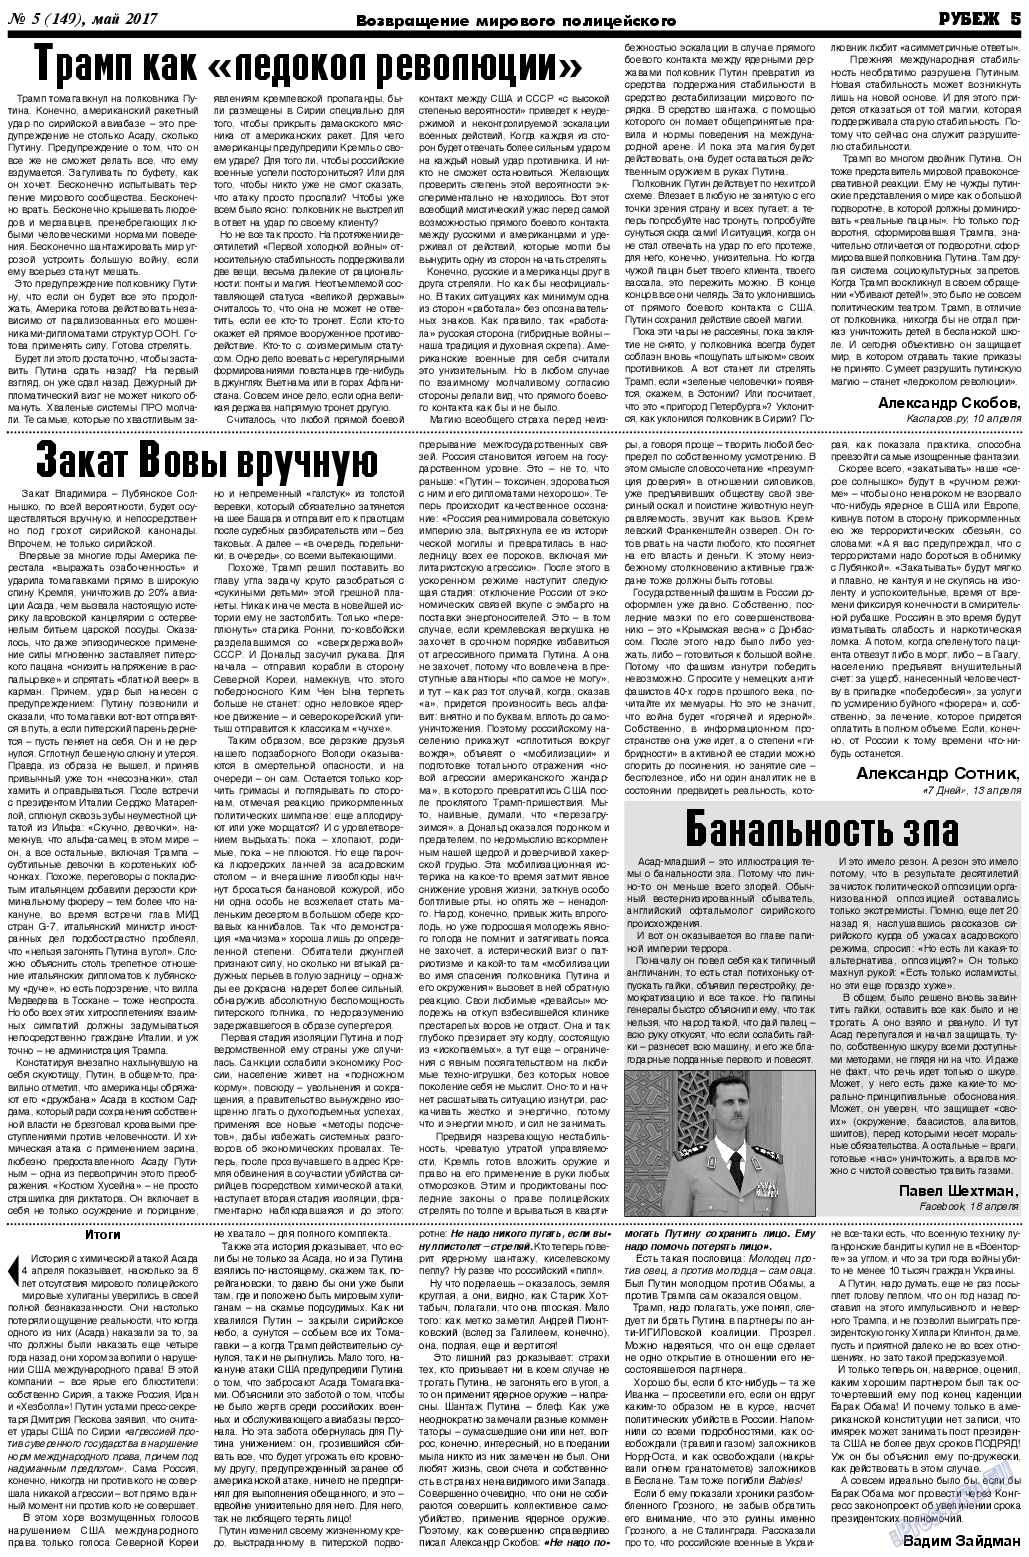 Рубеж, газета. 2017 №5 стр.5